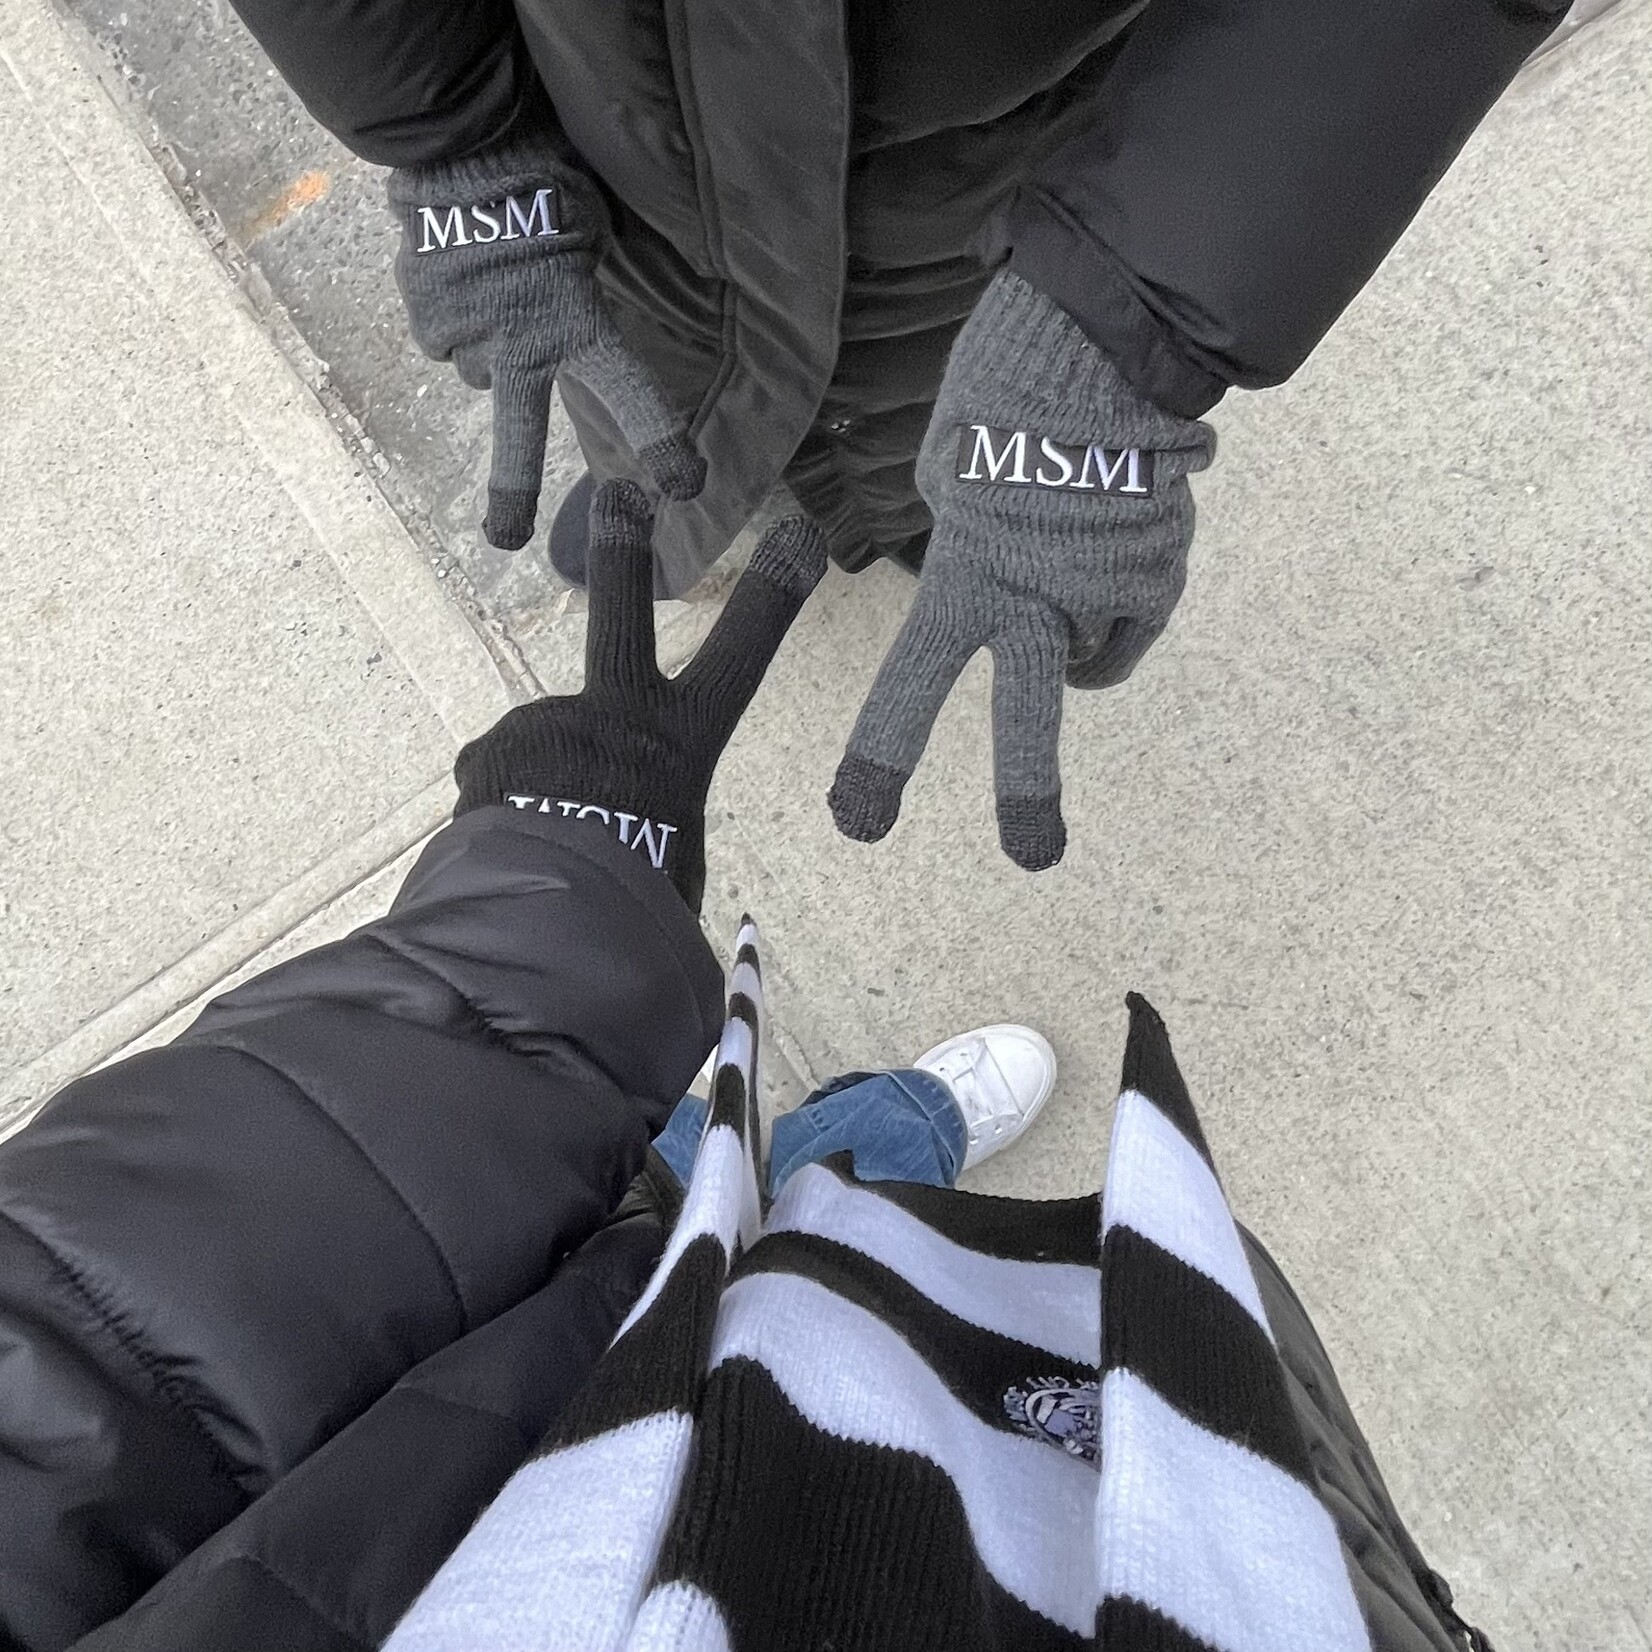 Touchscreen MSM Gloves